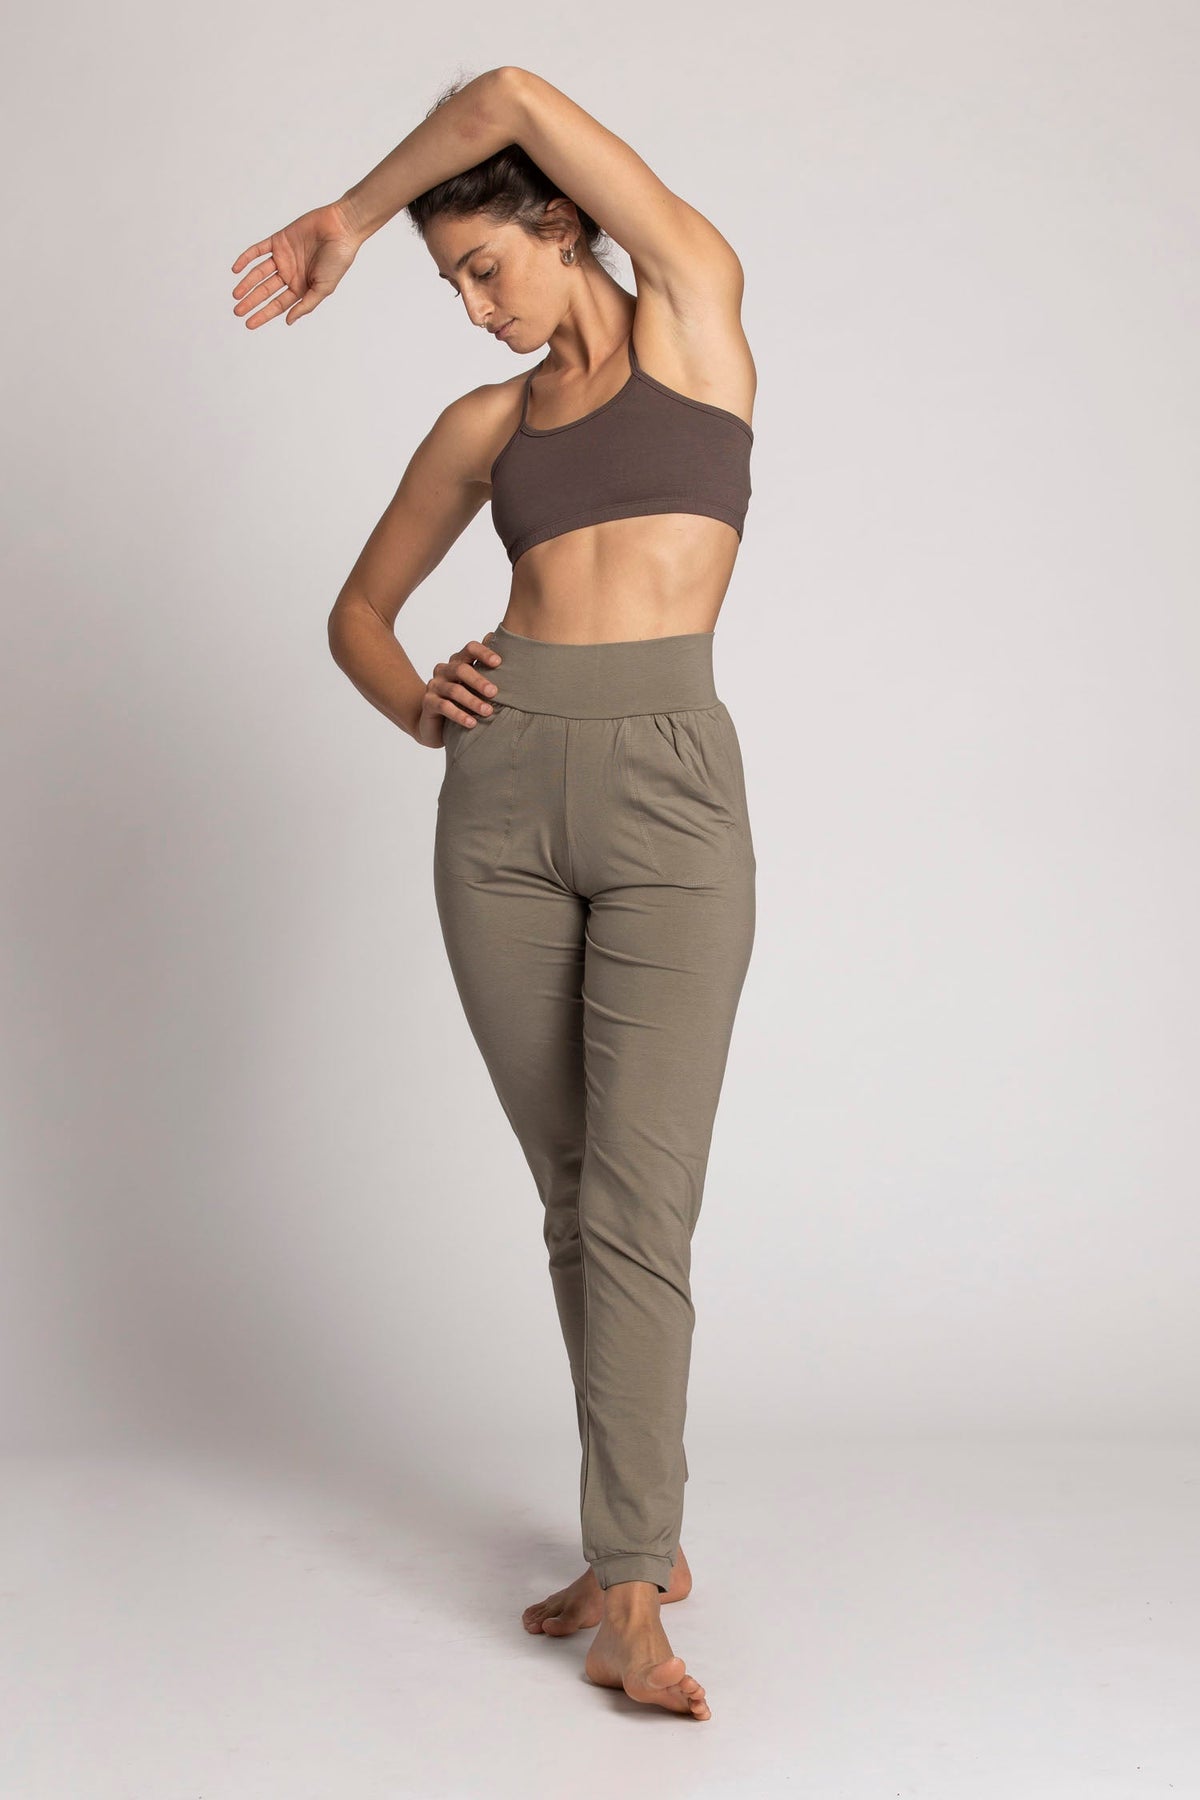 Slouchy Unisex Yoga Pants womens clothing Ripple Yoga Wear 